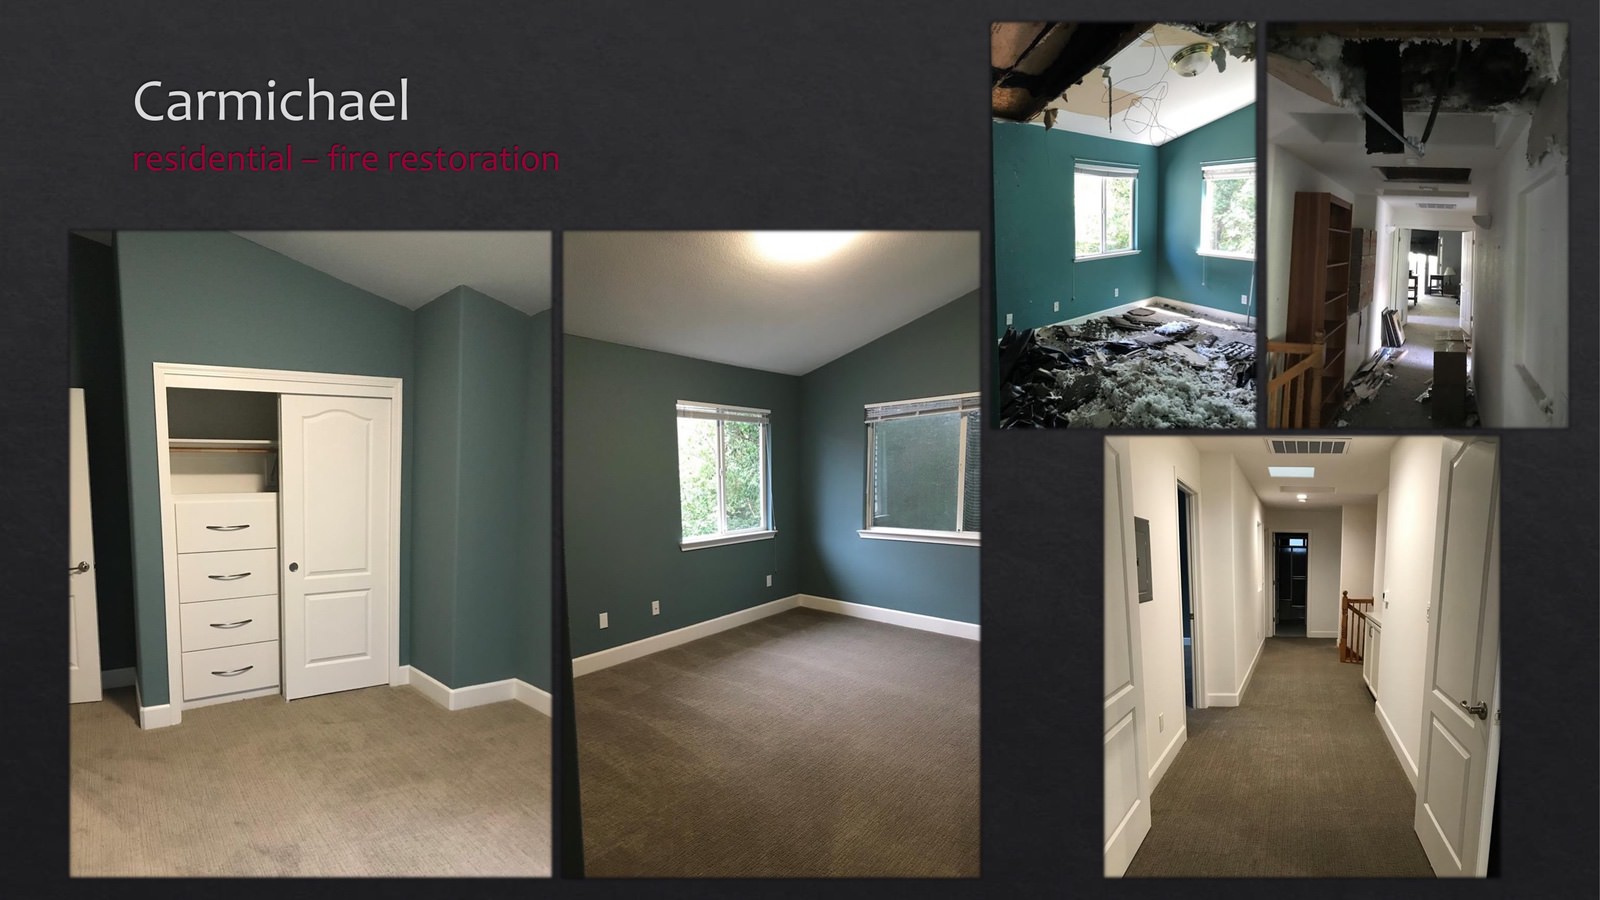 Carmichael Residential fire restoration - bedroom 